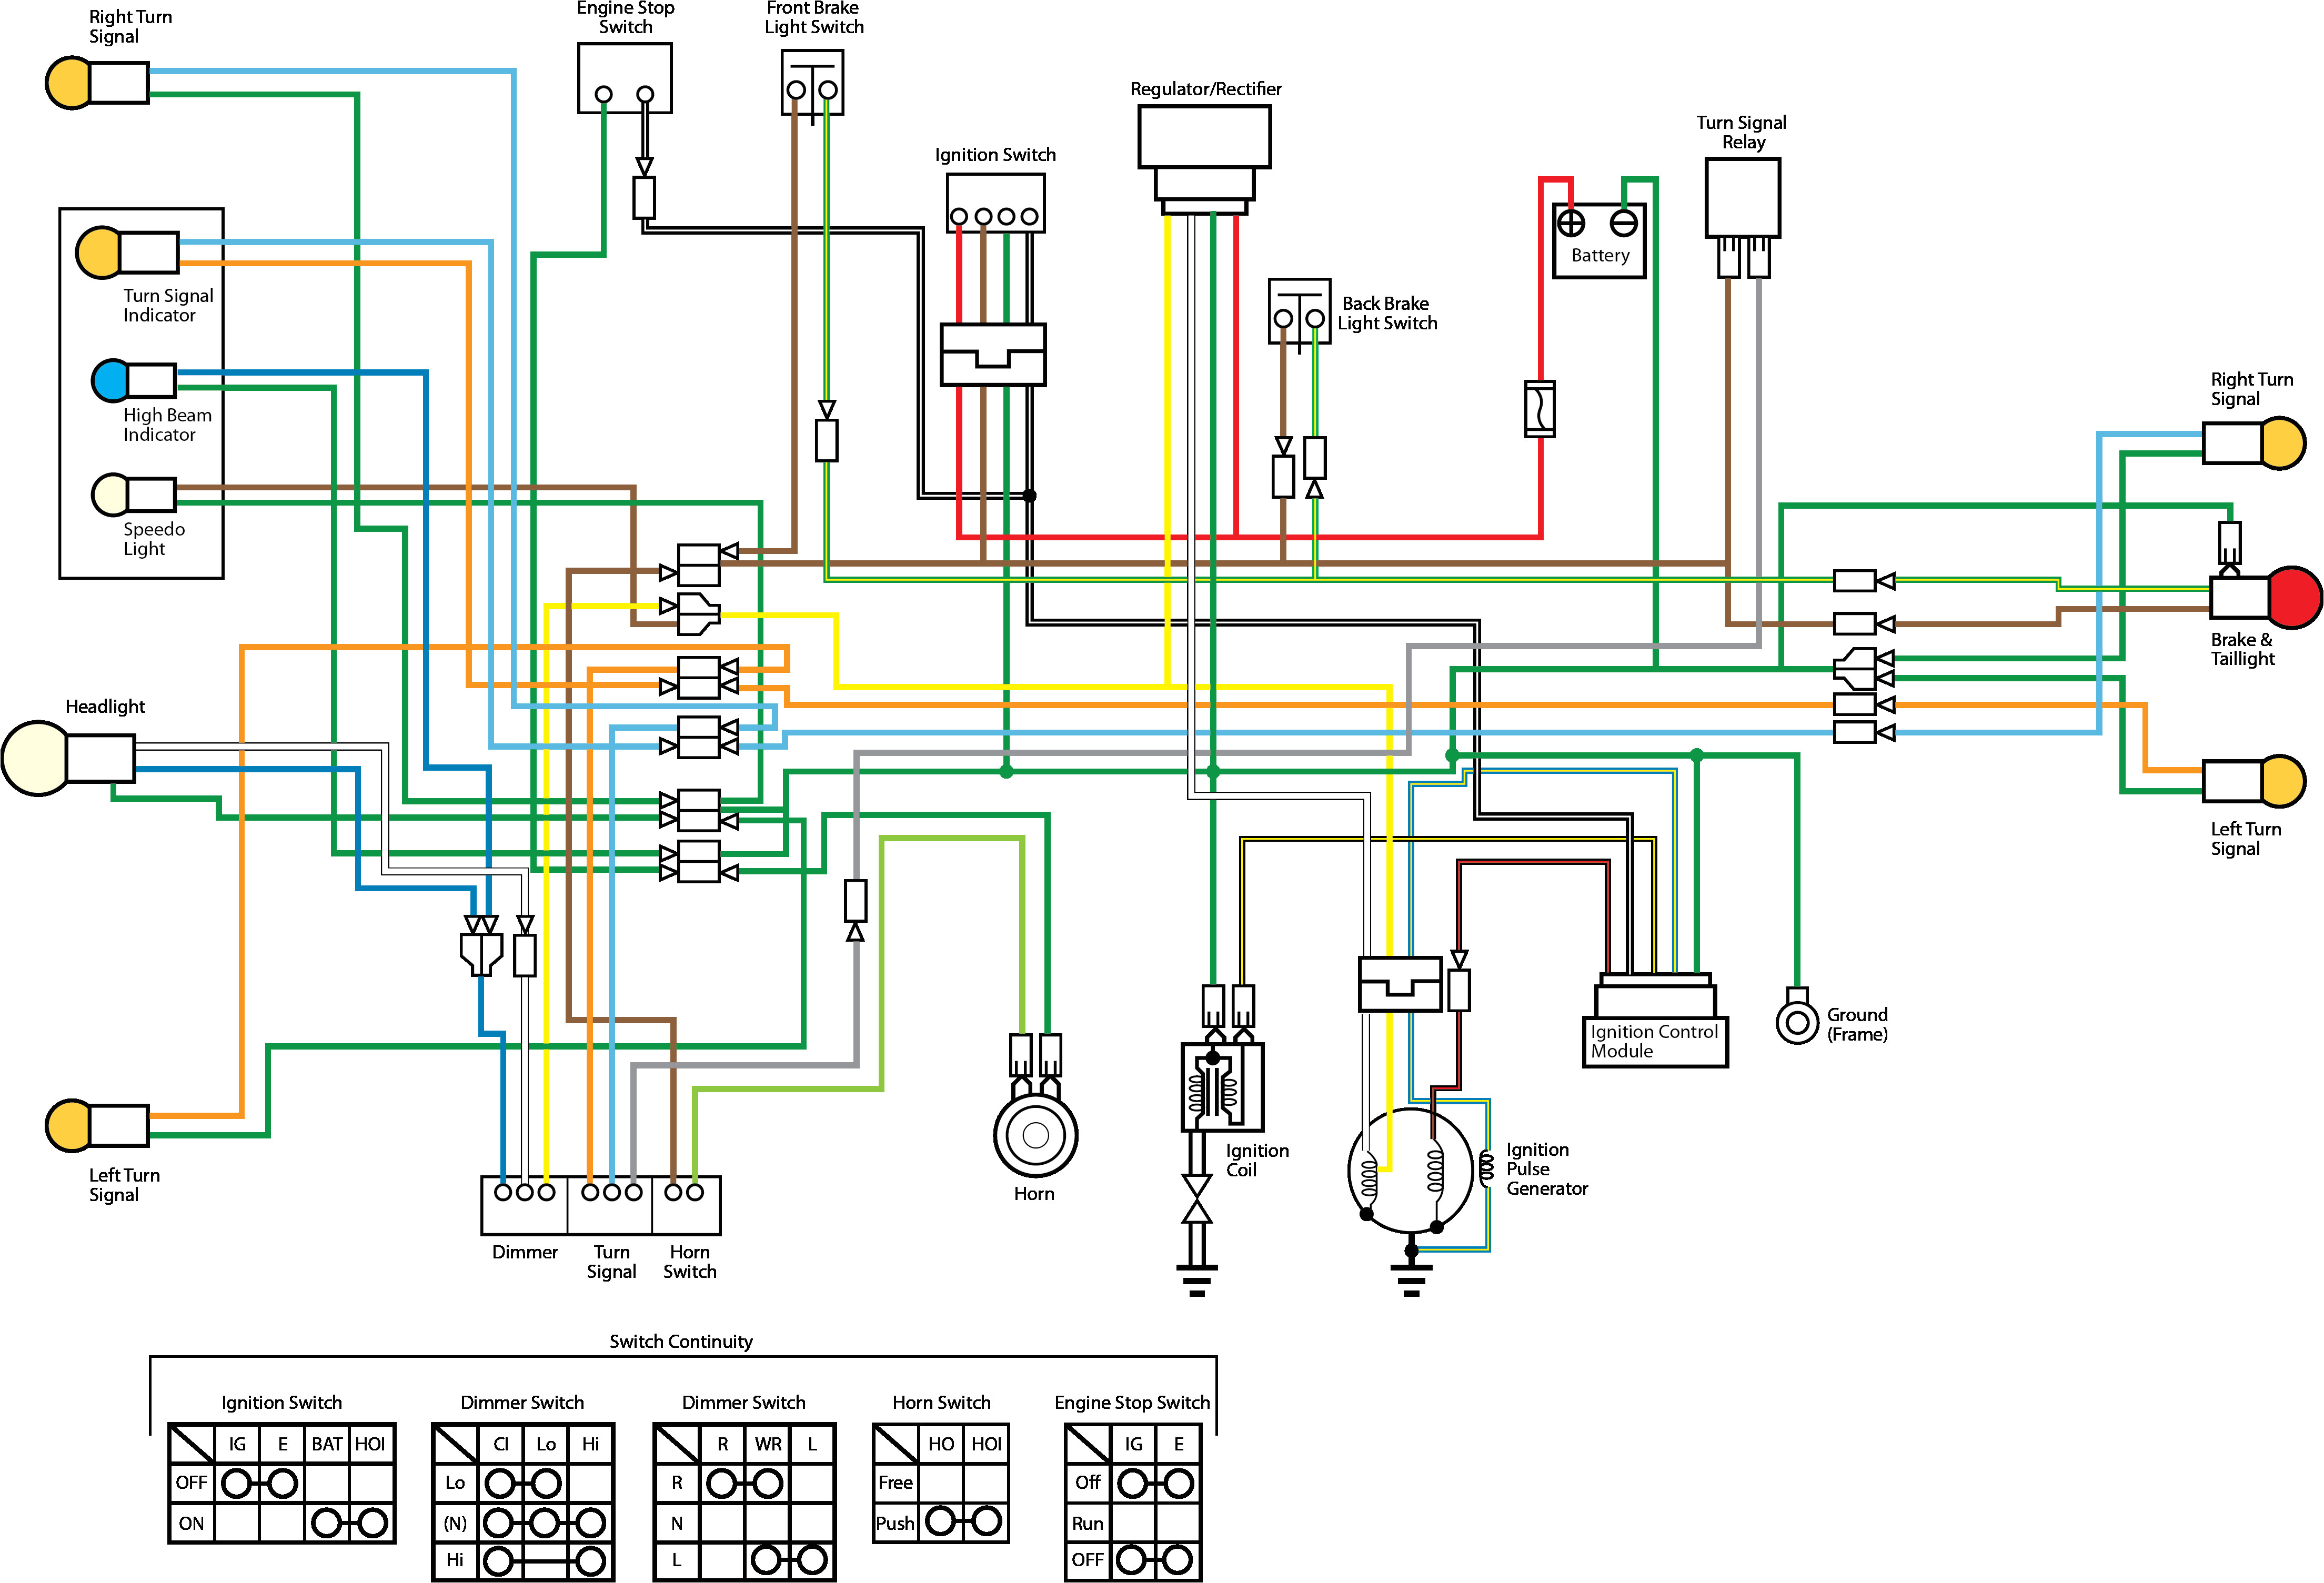 wiring diagram honda wave 125 wiring diagram mega honda wave 125 wiring system diagram wiring diagram honda wave 125